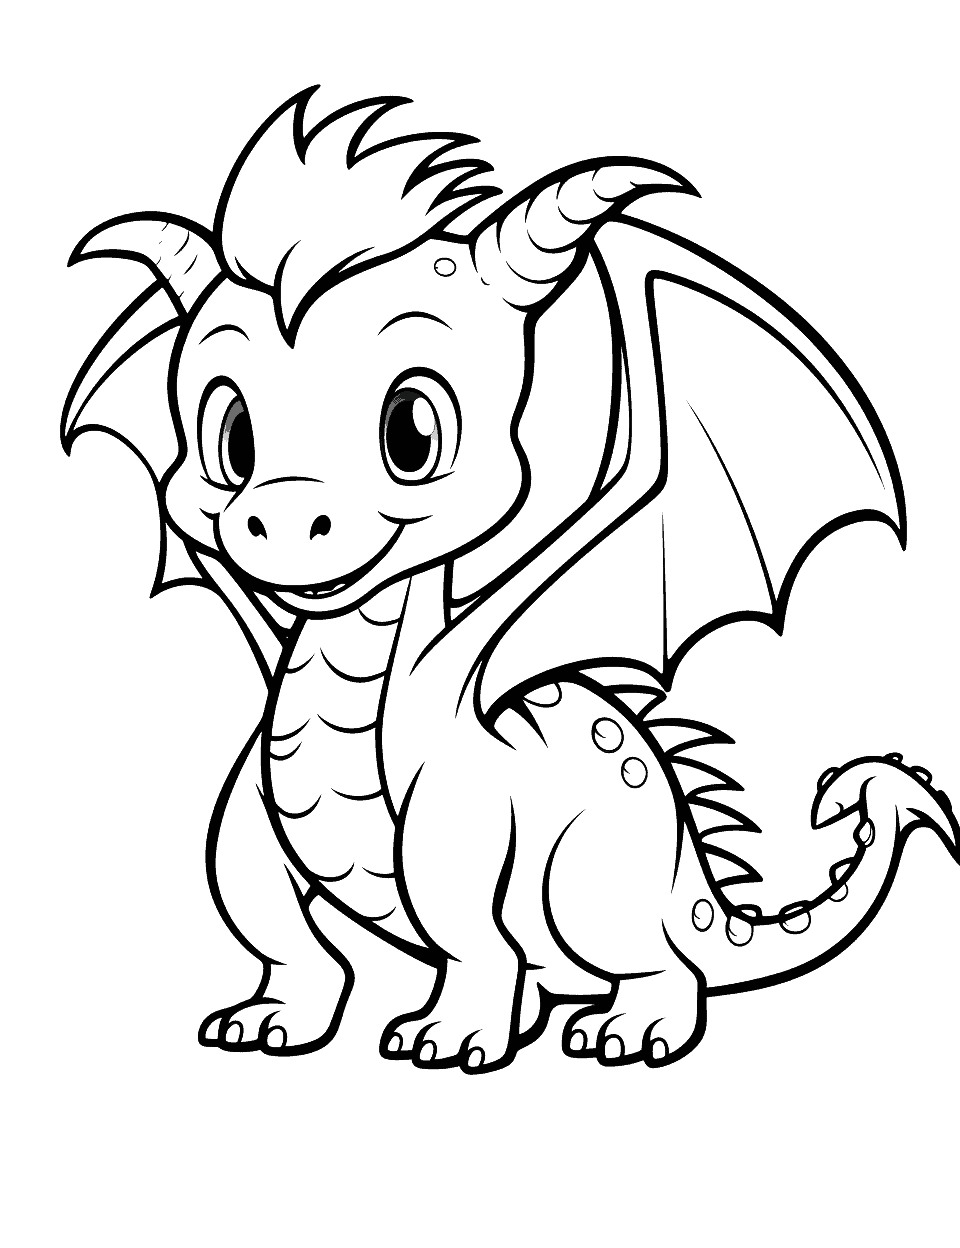 Kawaii Baby Dragon Coloring Page - A kawaii-style baby dragon, with big eyes and a playful smile.